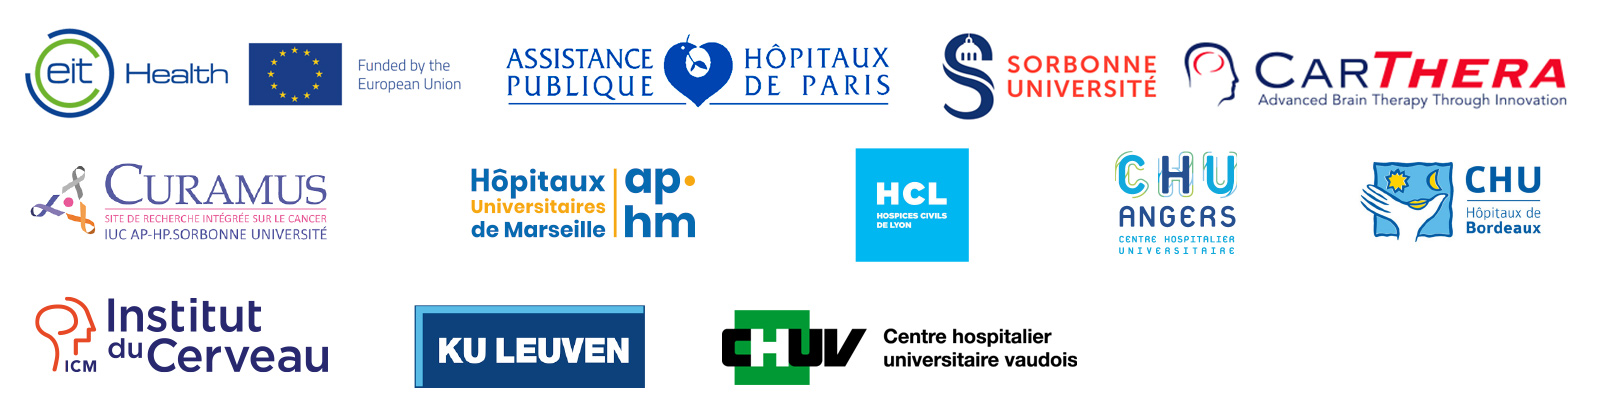 SonoFirst Partners - APHP- Sorbonne U - CarThera - Curamus - Aphm -HCL -CHu Angers - Chu Bordeaux - ICM -Ku Leuven - CHUV